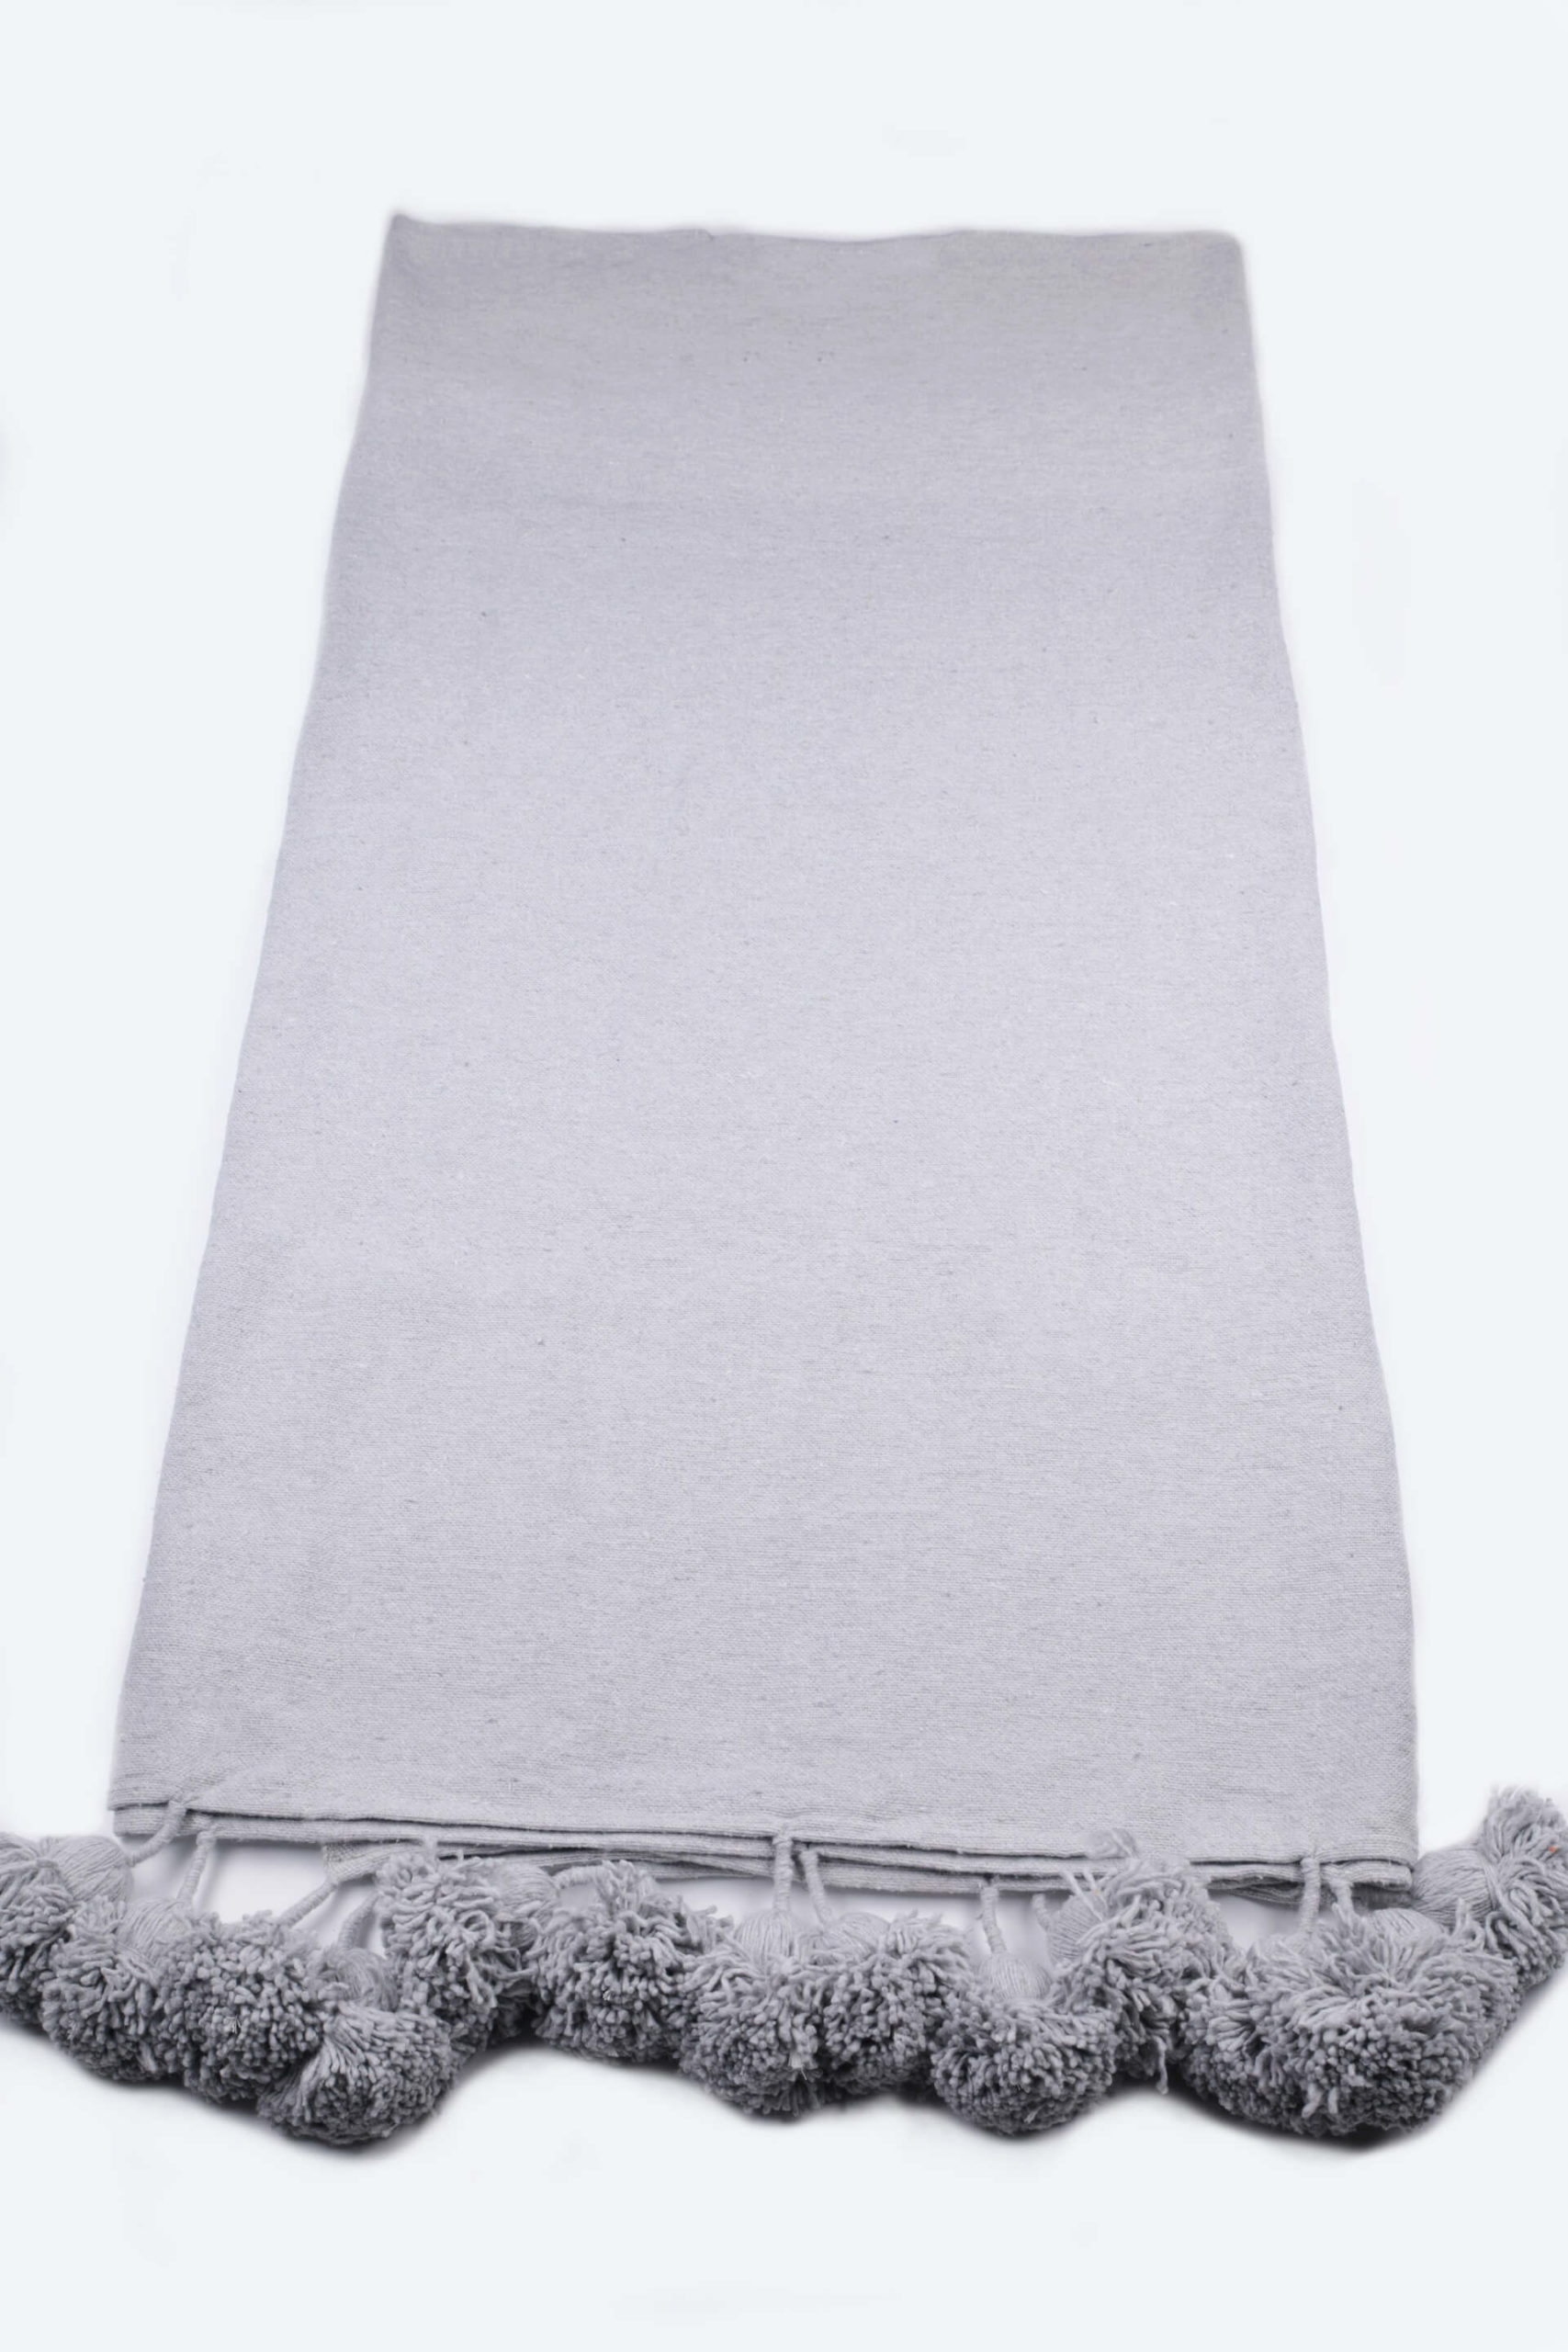 Grey blanket